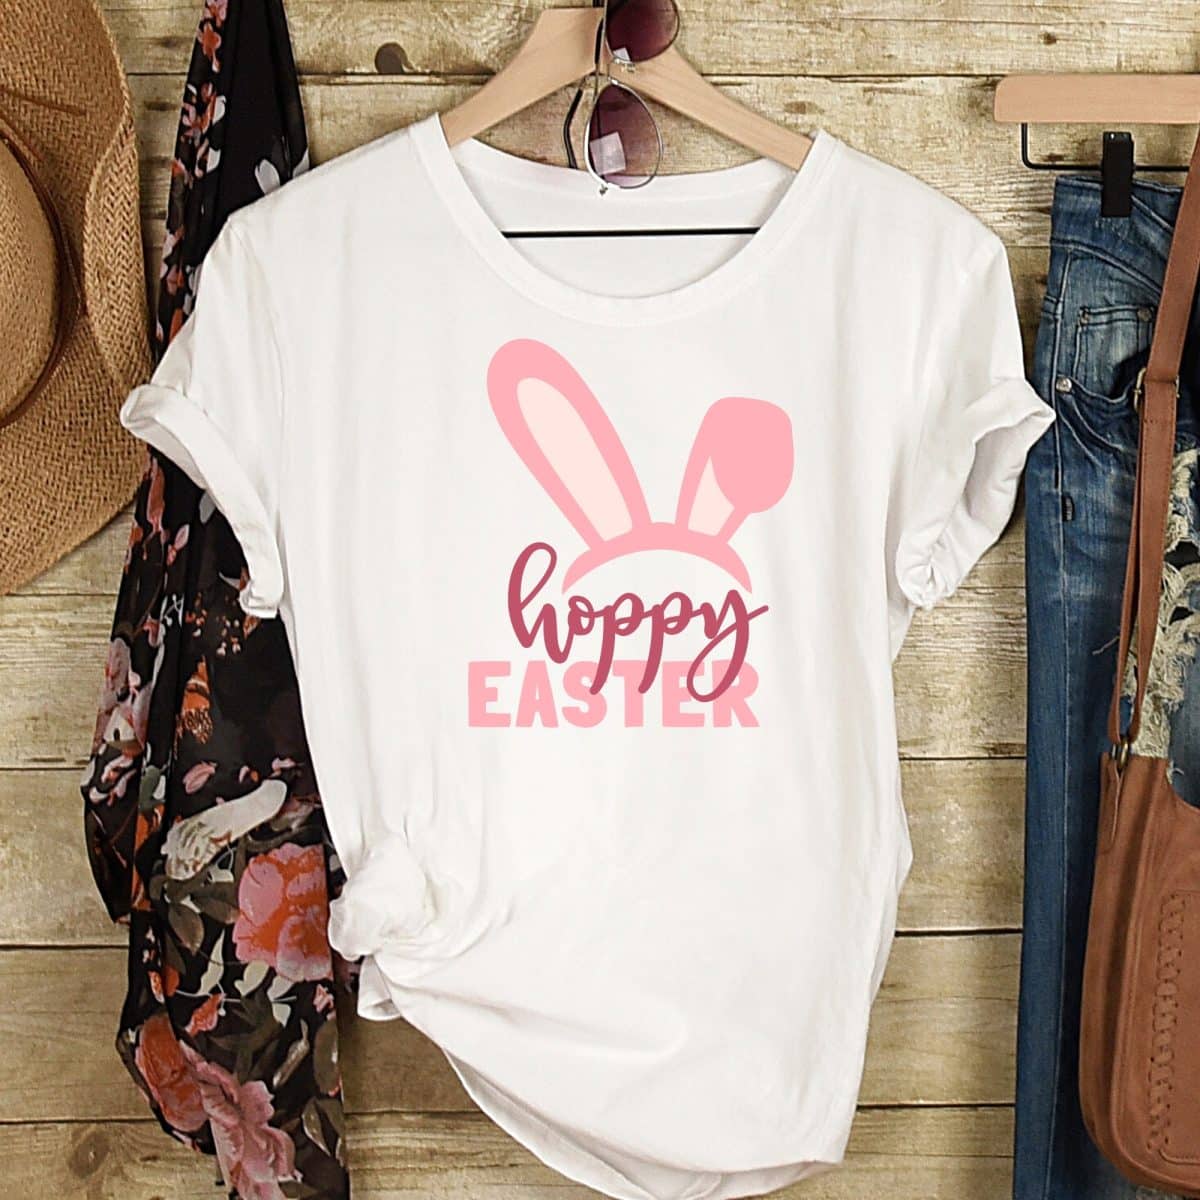 Hoppy Easter SVG by The Crafty Blog Stalker